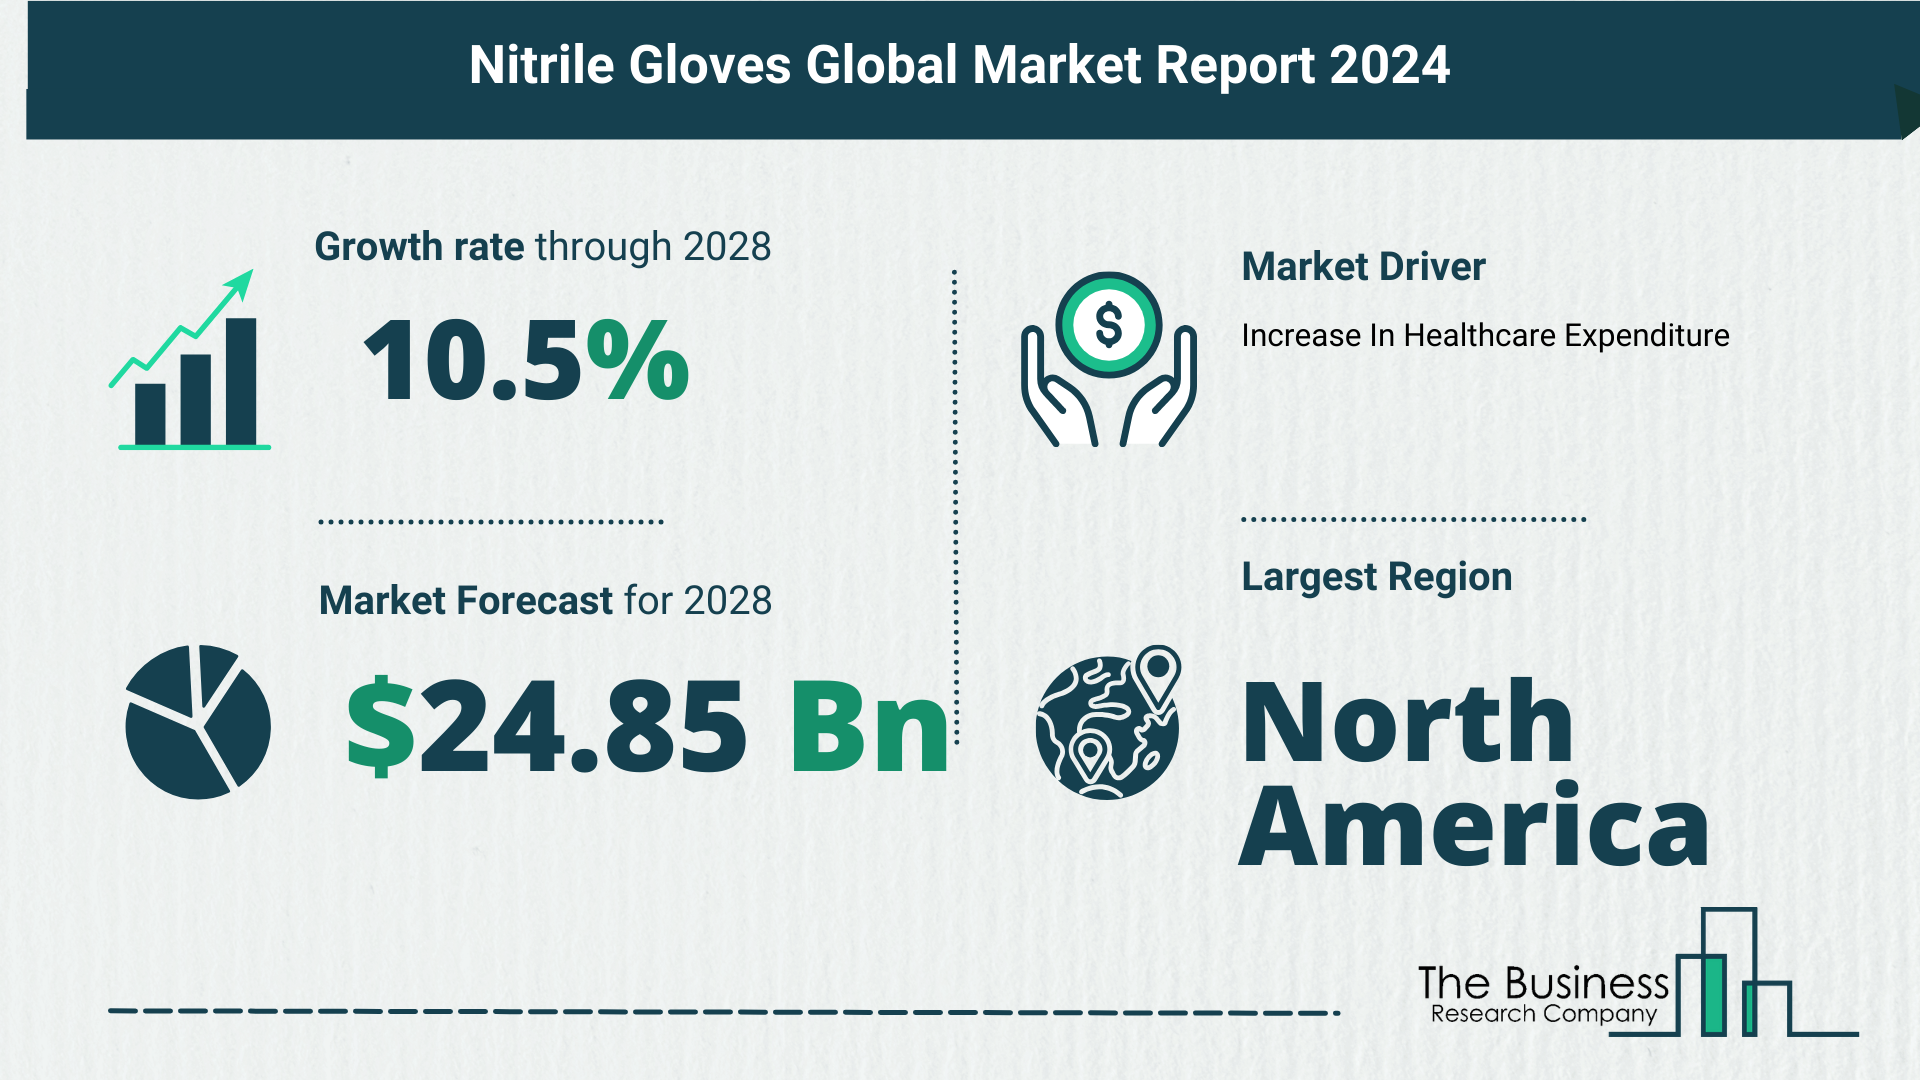 Nitrile Gloves Market Forecast 2024: Forecast Market Size, Drivers And Key Segments